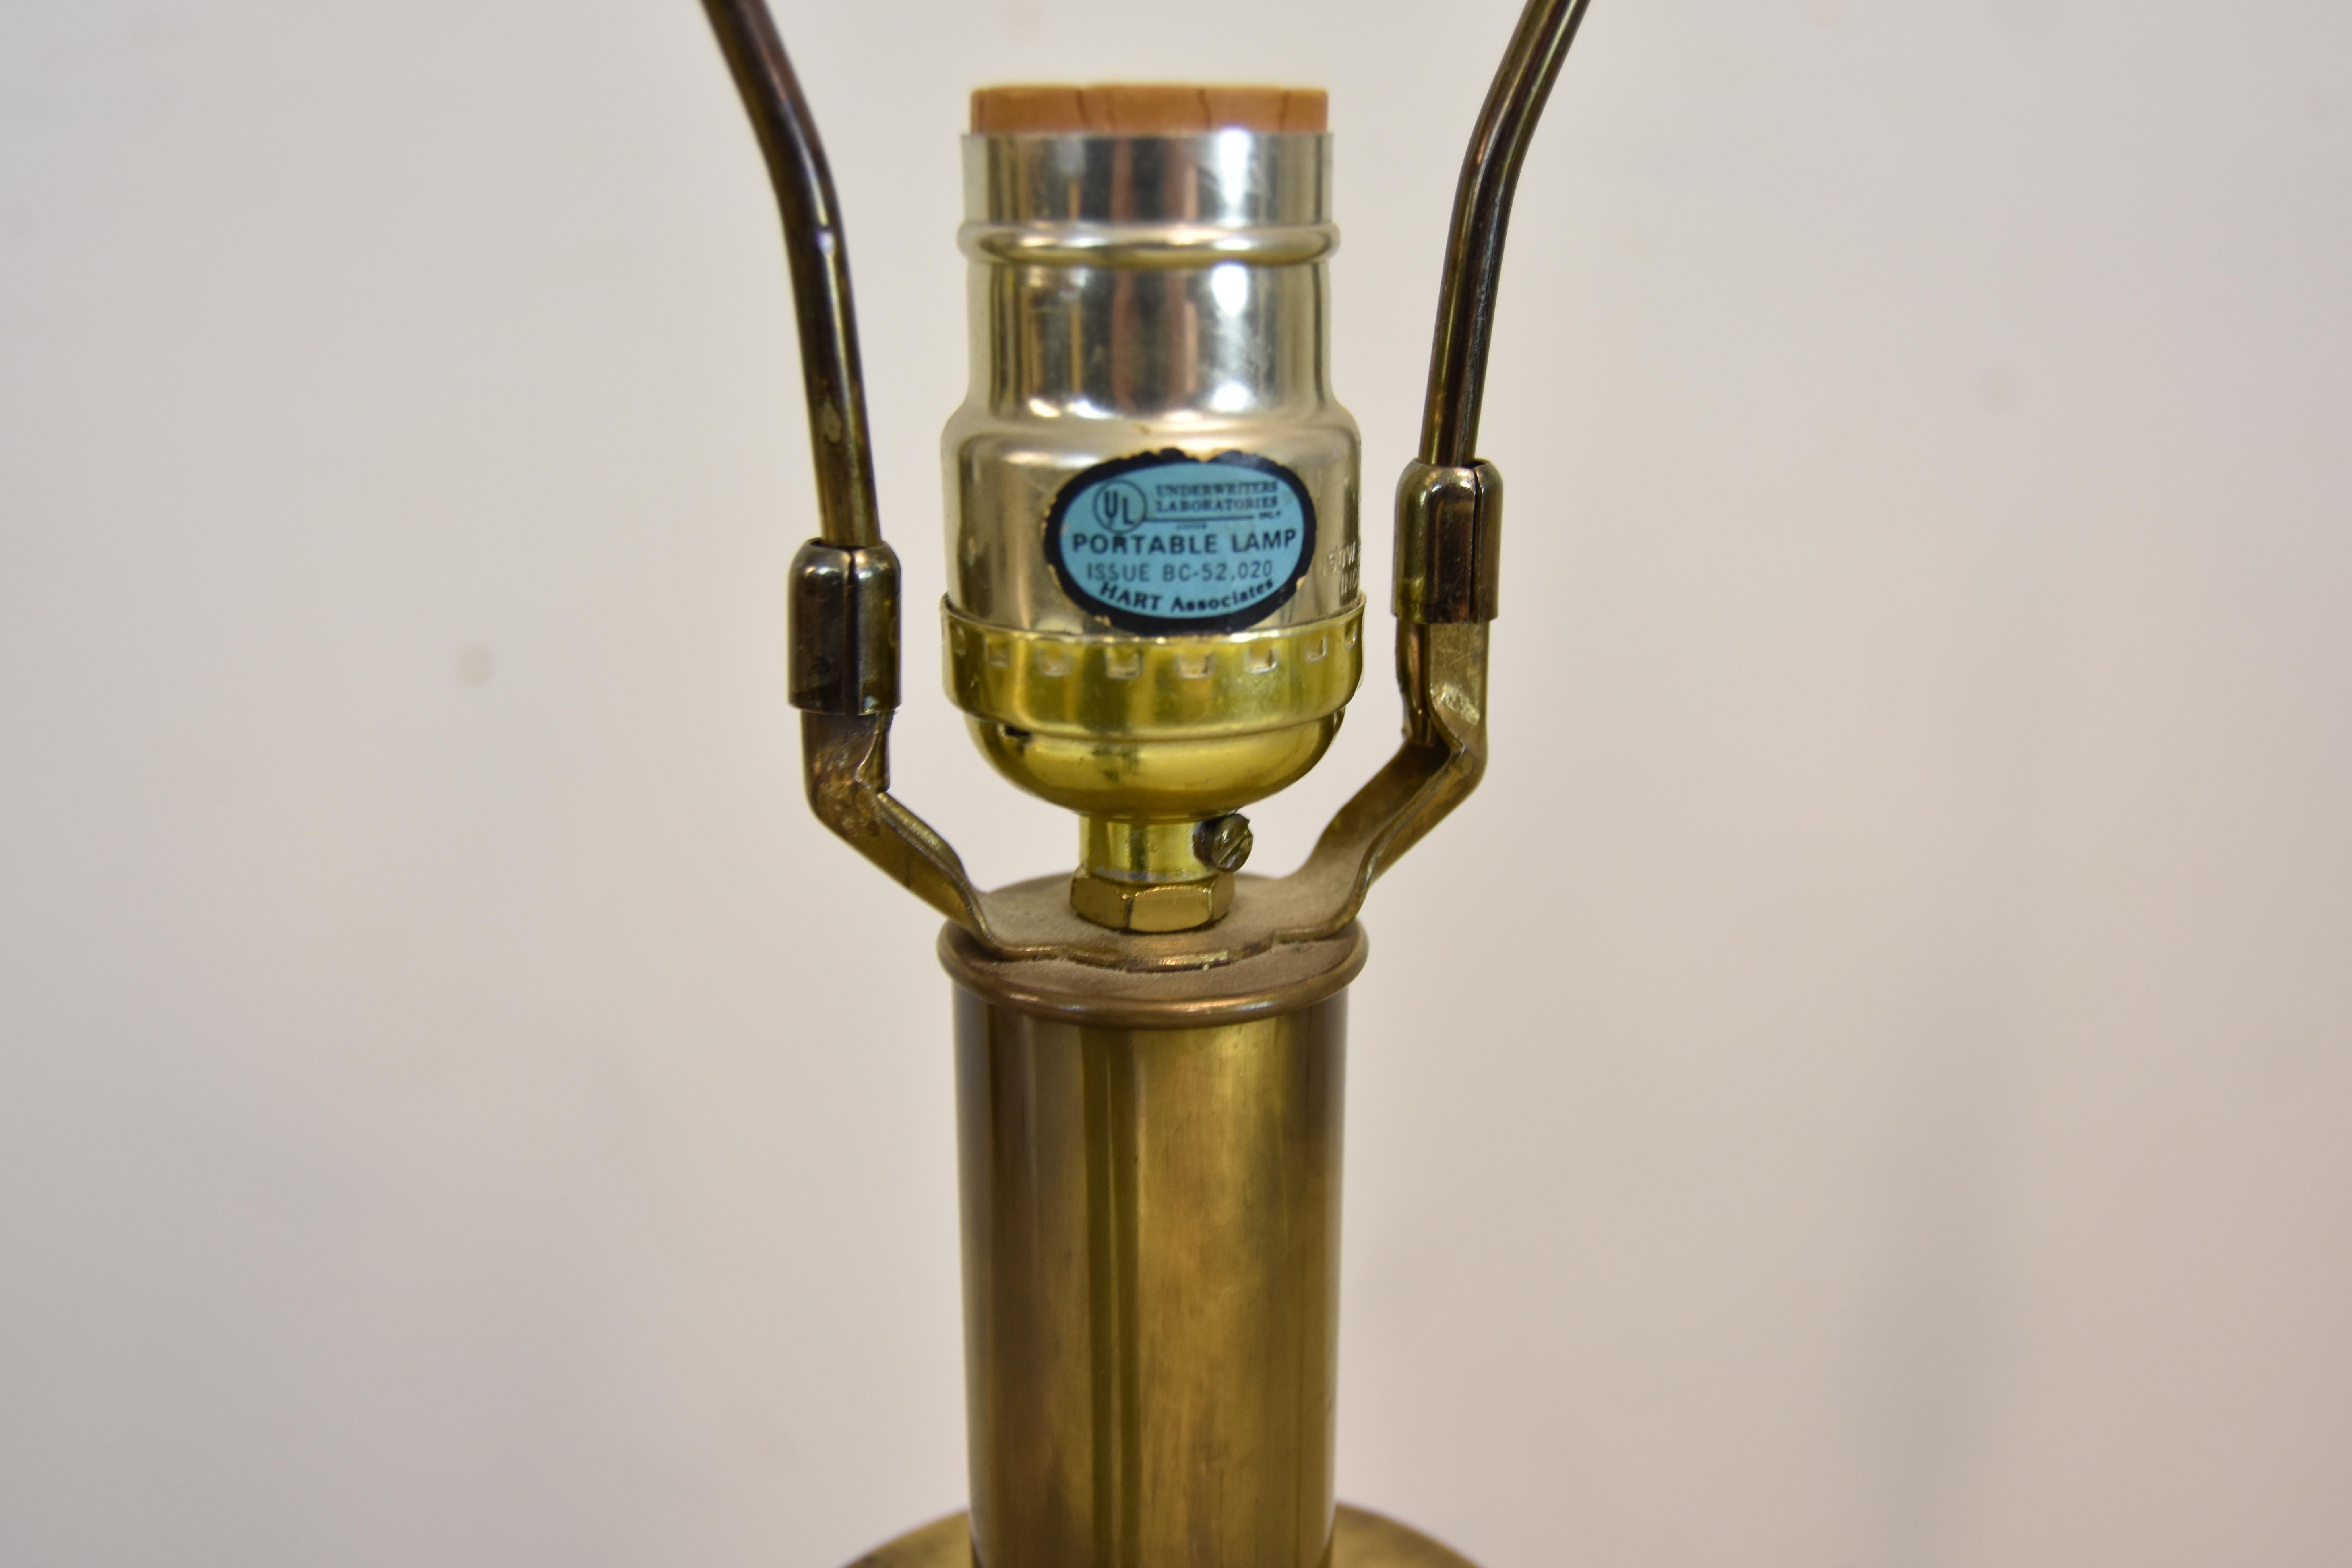 North American Pair of Hart Associates Brass Adjustable Single Socket Floor Lamps